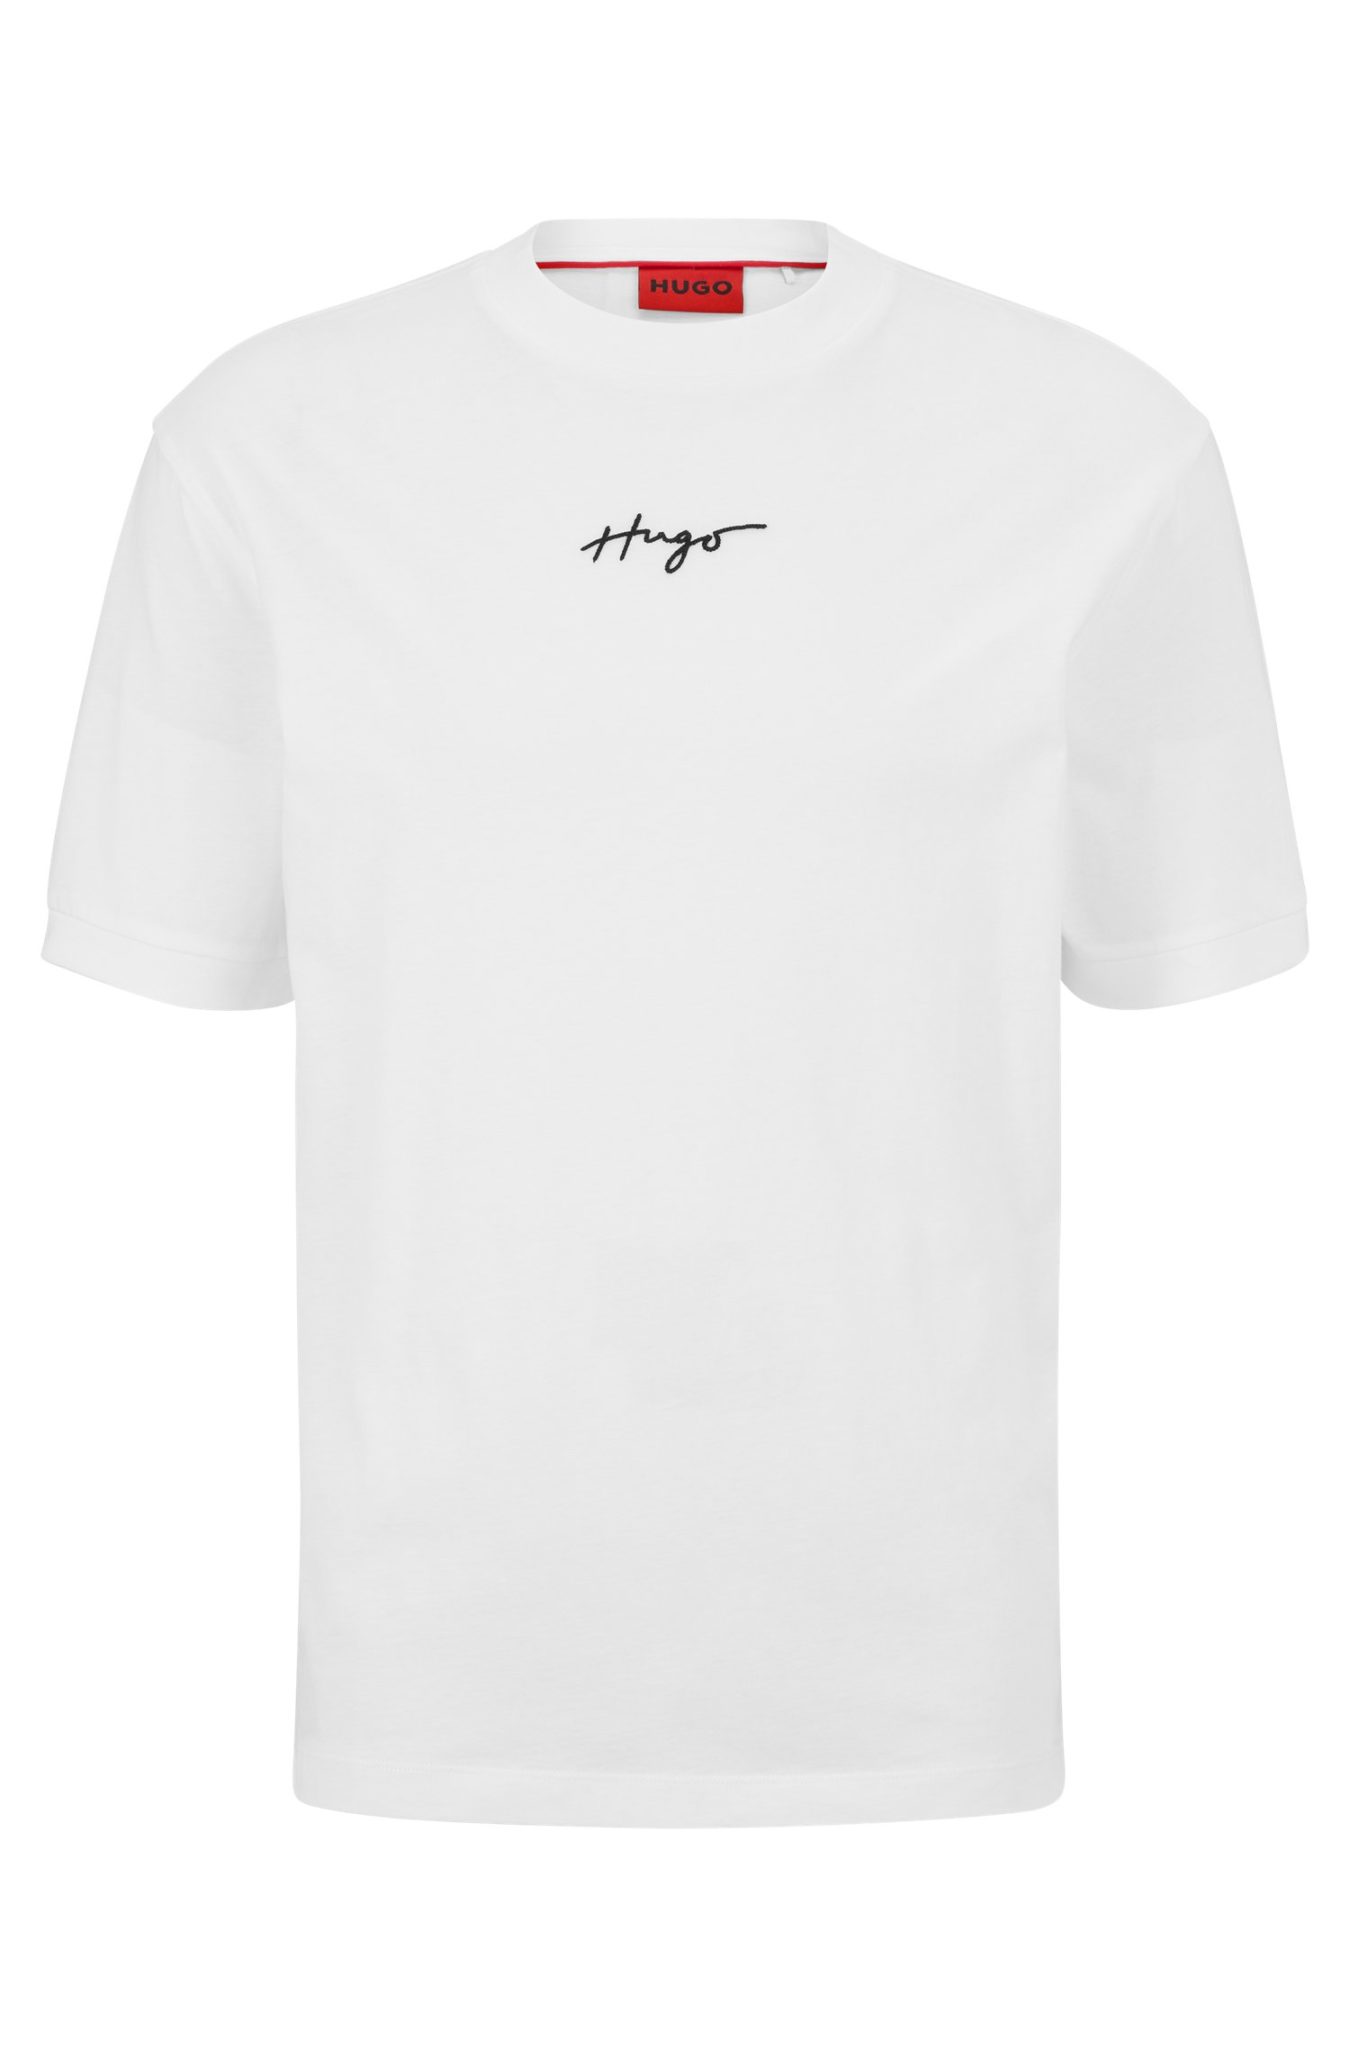 Hugo Boss T-shirt Relaxed Fit en jersey de coton à logo brodé